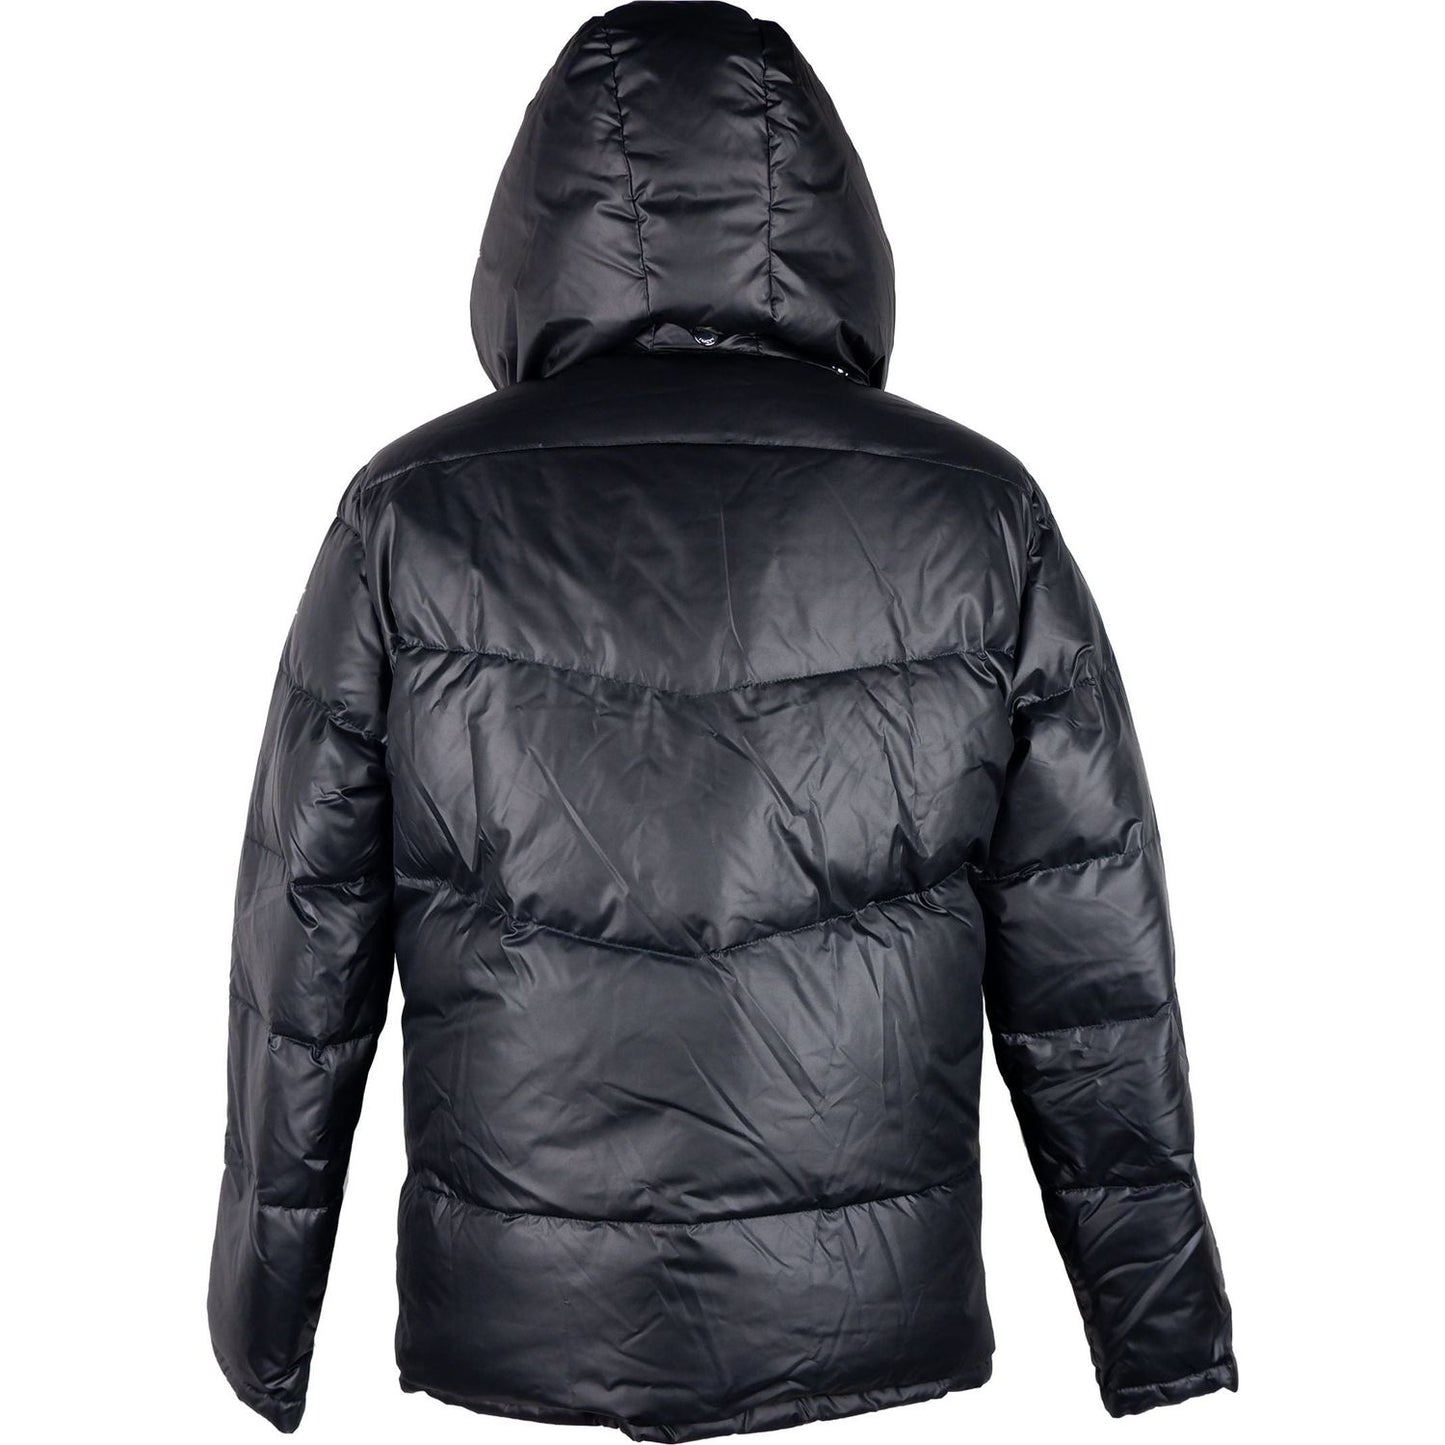 Aquascutum Elegant Black Padded Jacket with Removable Hood black-polyester-jacket-3 MAN COATS & JACKETS product-7381-1036792109-scaled-17b0d7f6-0cc.jpg